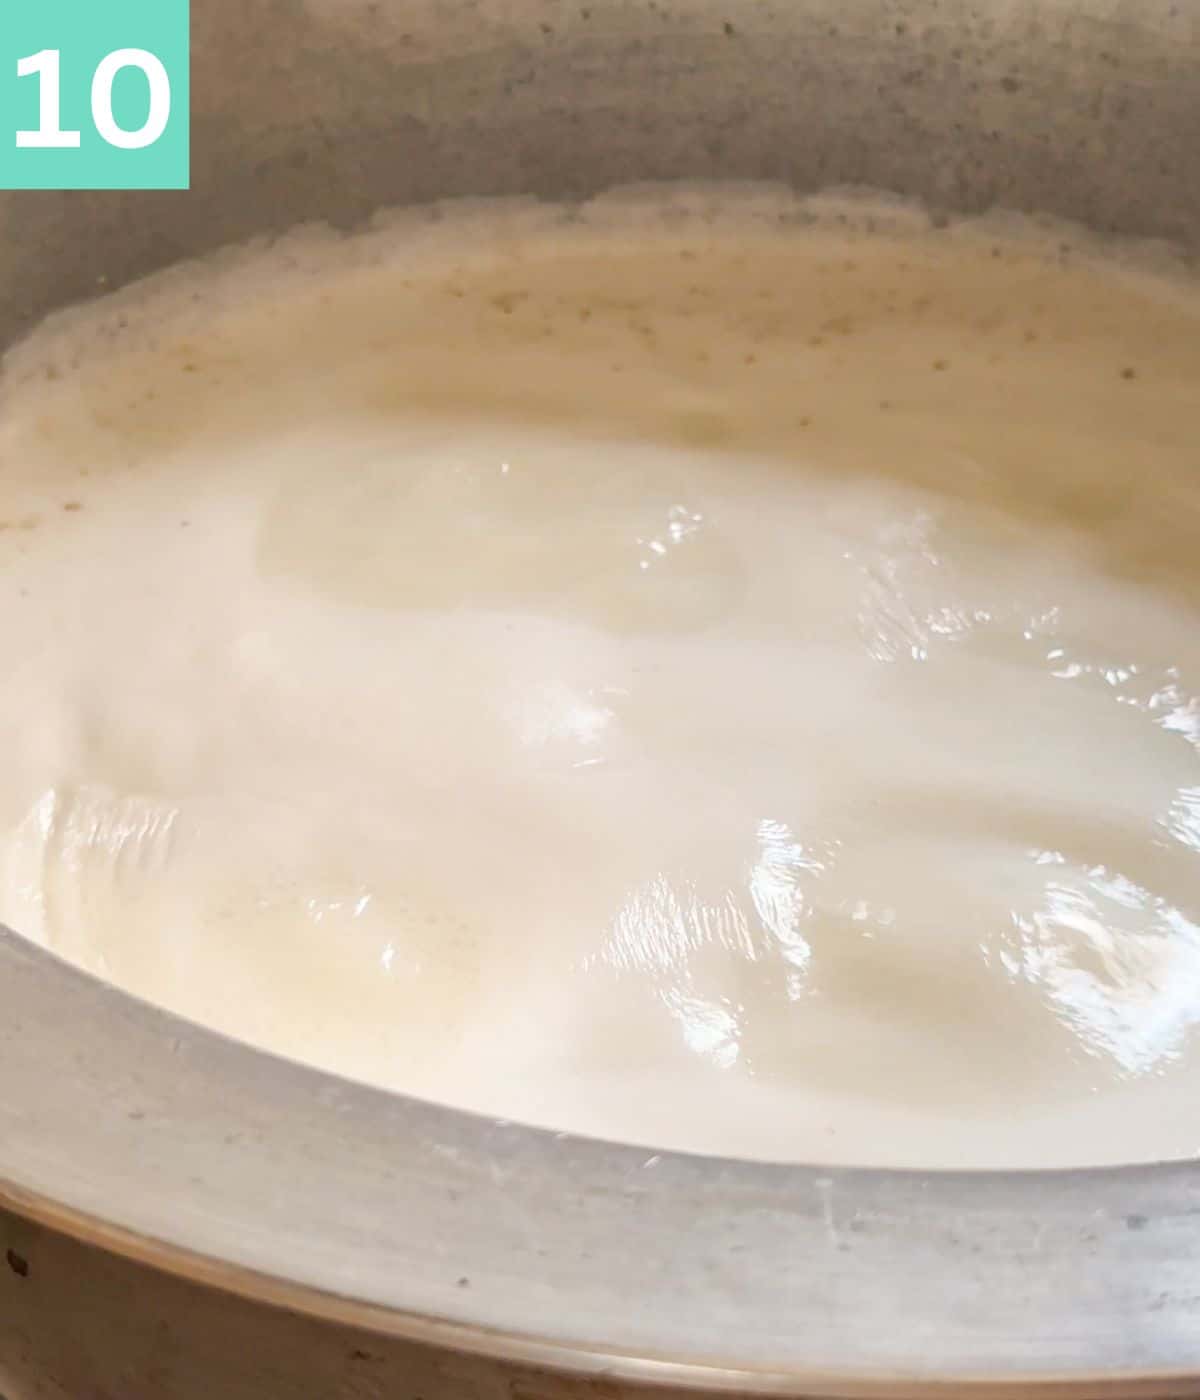 simmering milk in a pot.